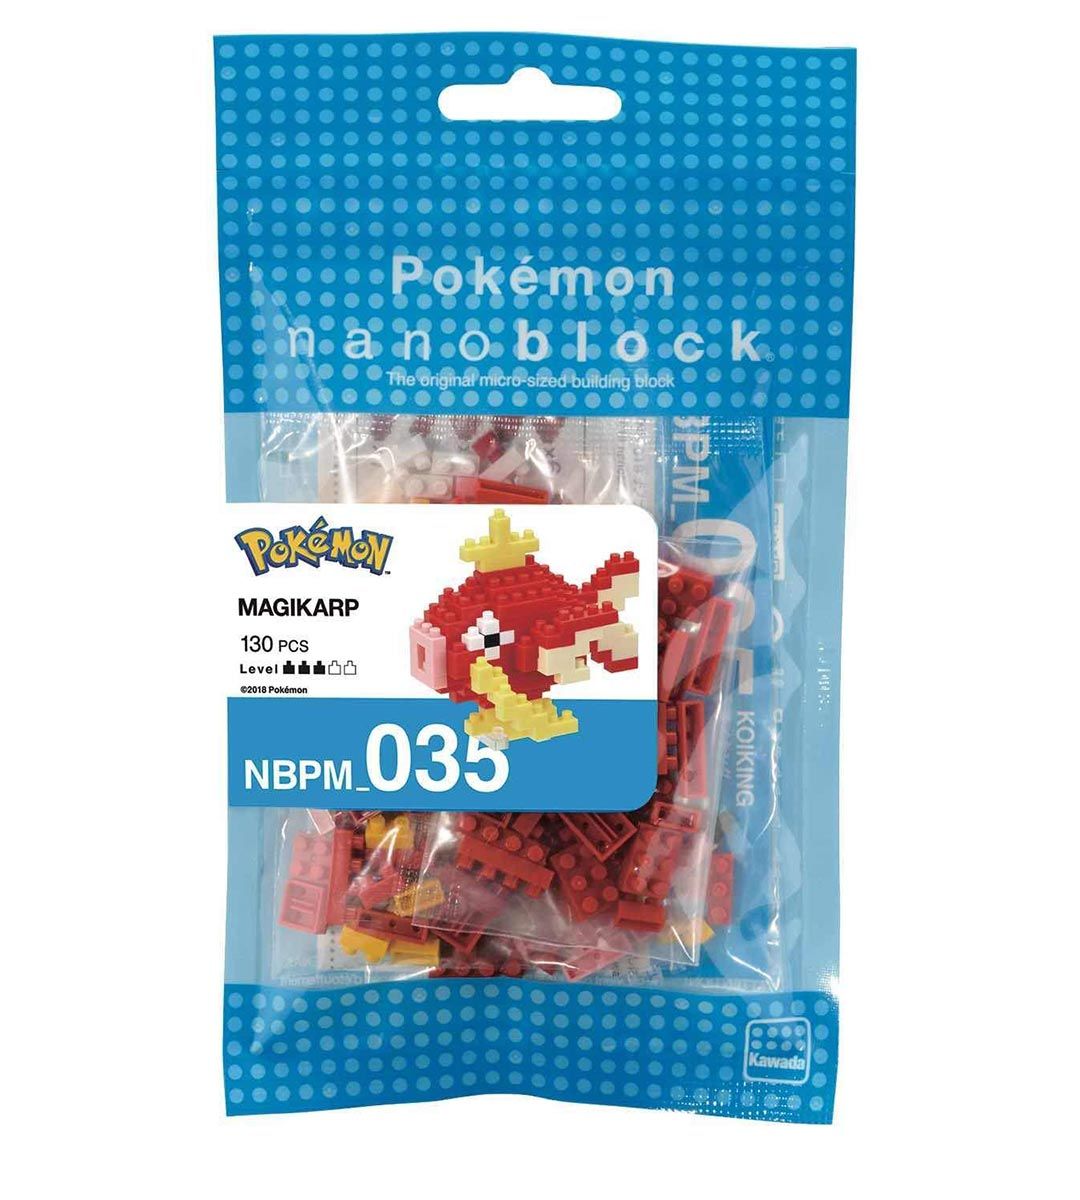 Pokémon x Nanoblock - Magicarpe - NBPM 035